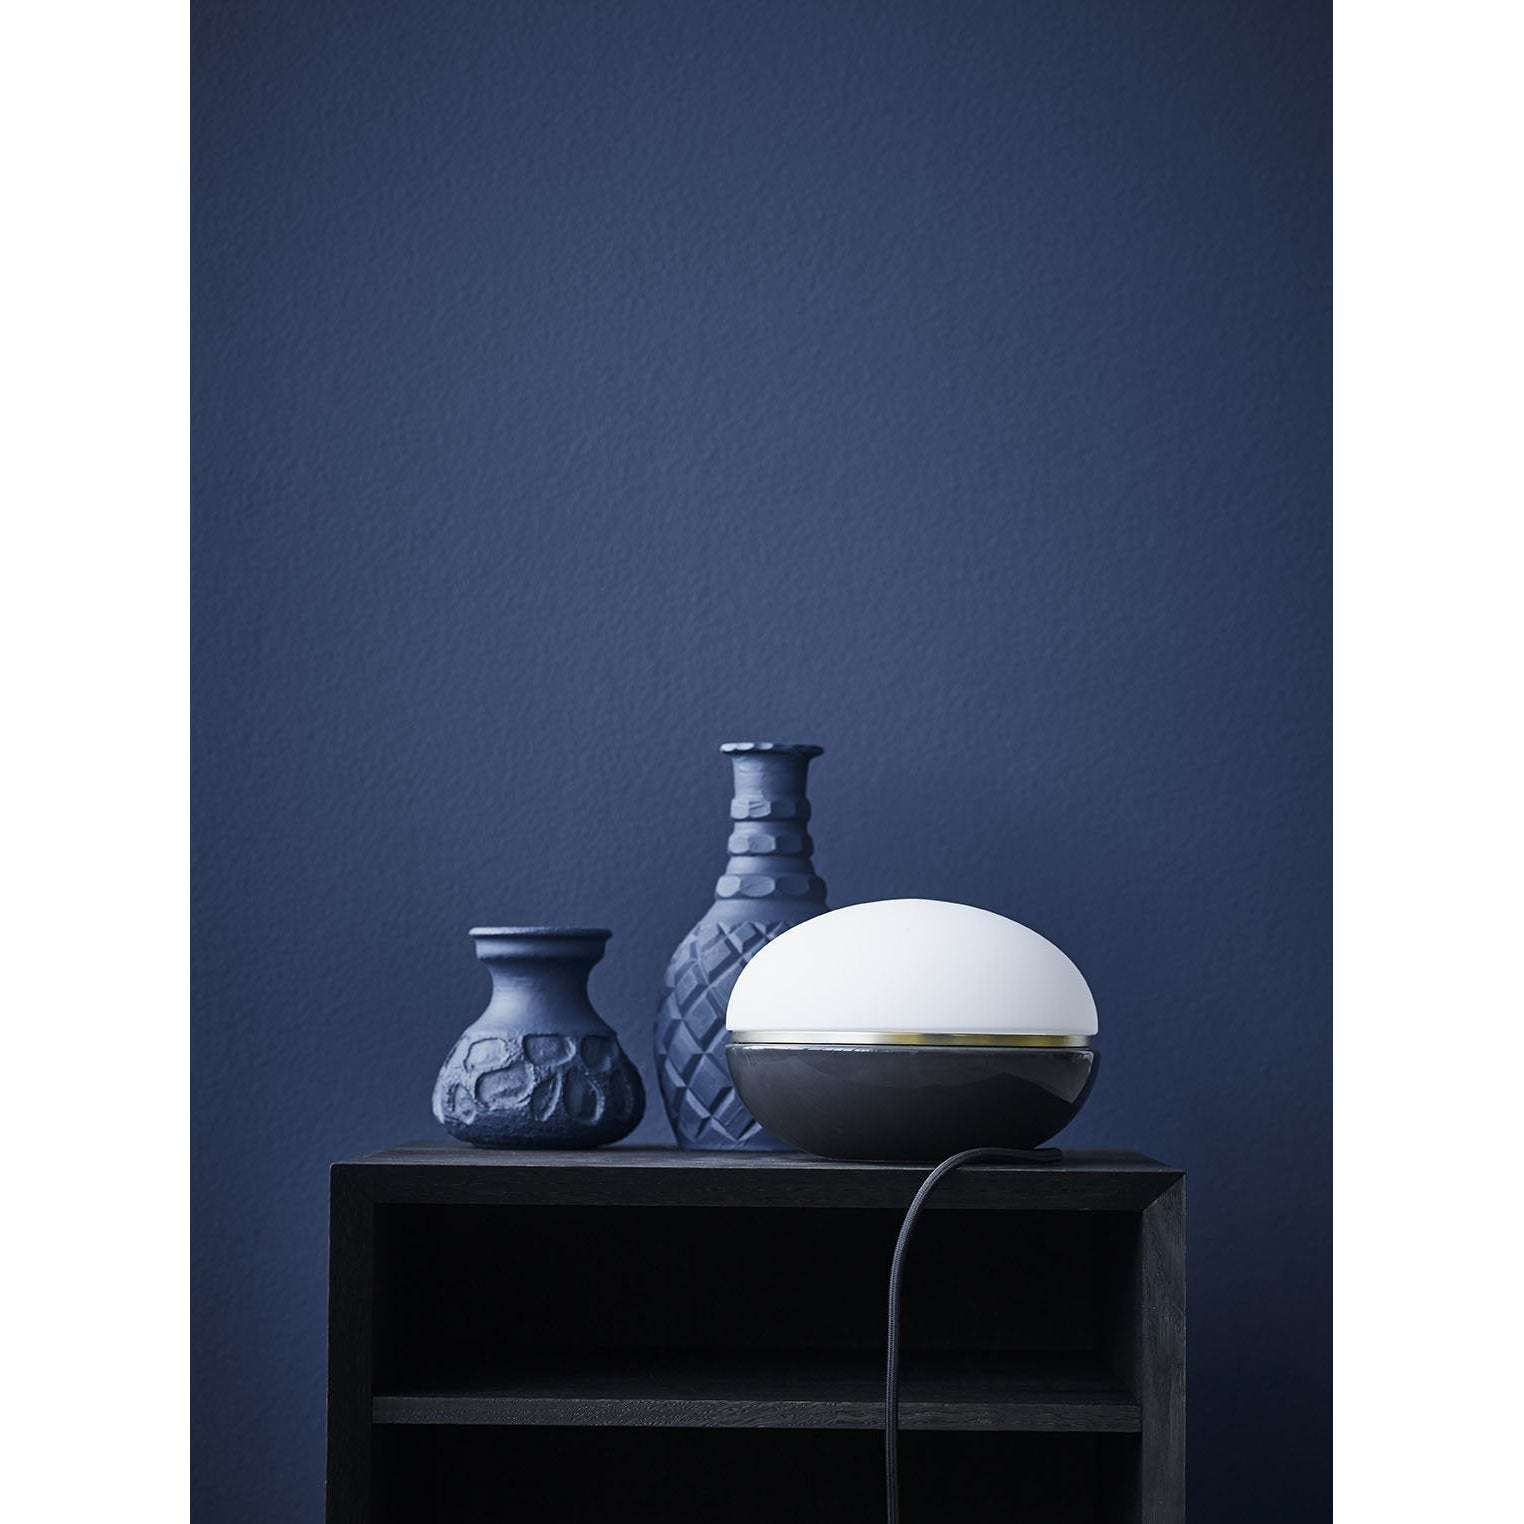 Lucie Kaas Macaroon Table Lamp Light Gray, 18 cm